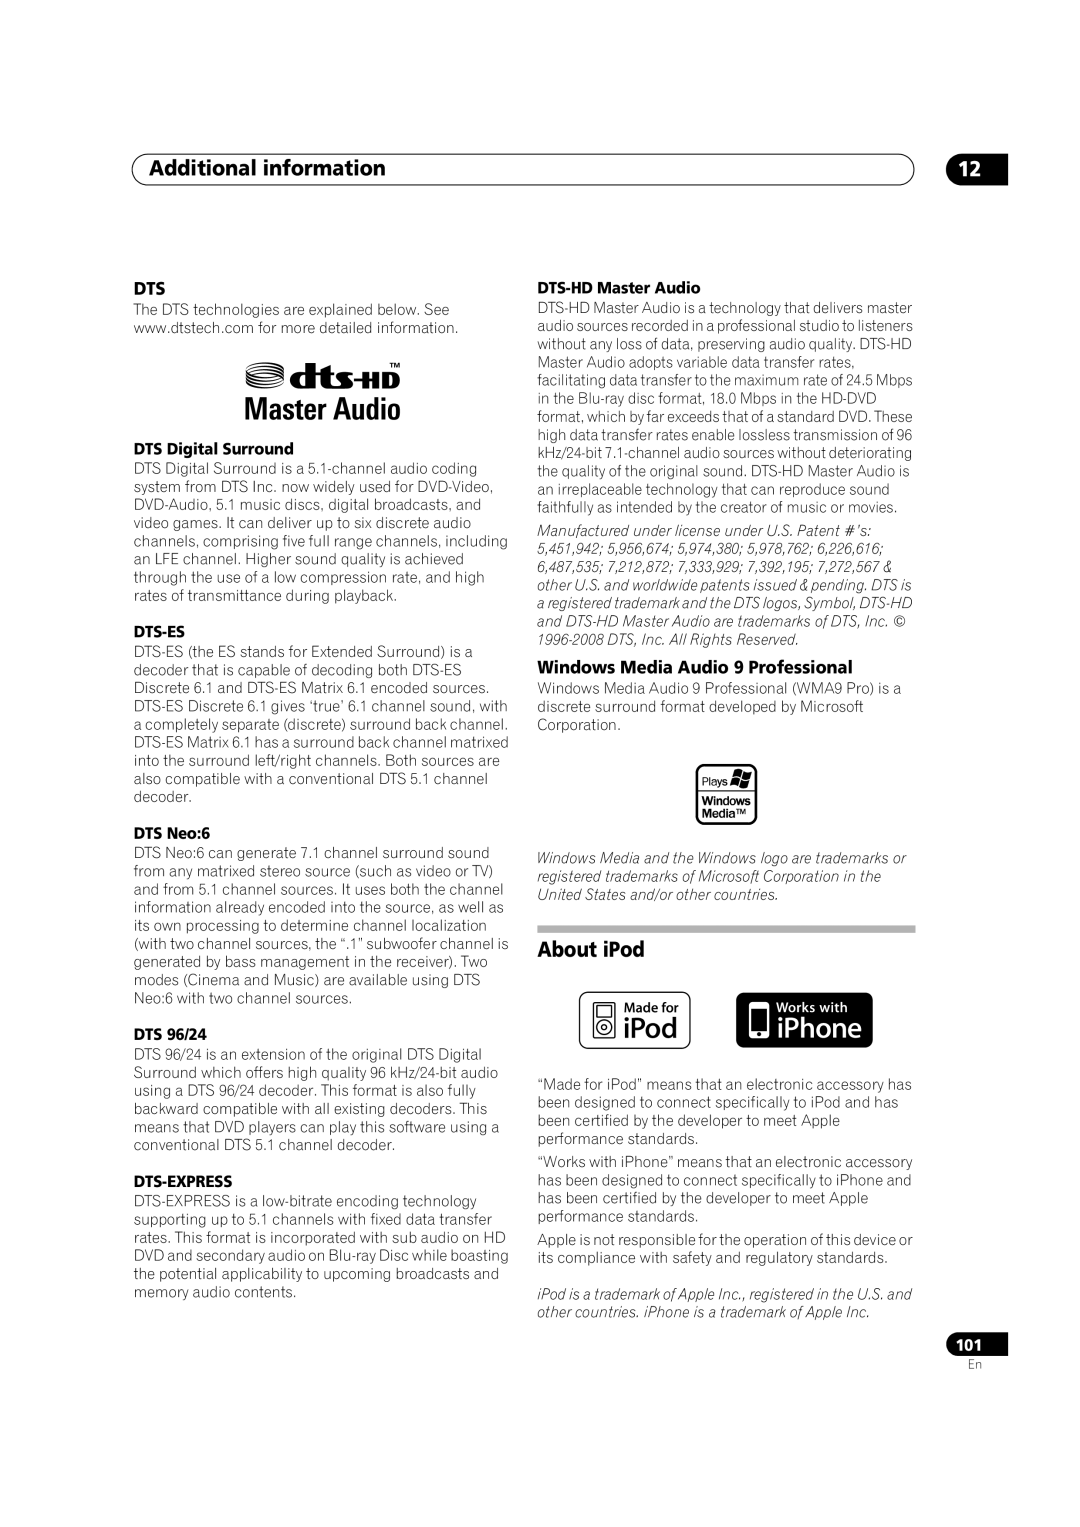 Pioneer VSX-LX52 manual About iPod, Windows Media Audio 9 Professional, DTS Digital Surround, Dts-Es, DTS-HDMaster Audio 